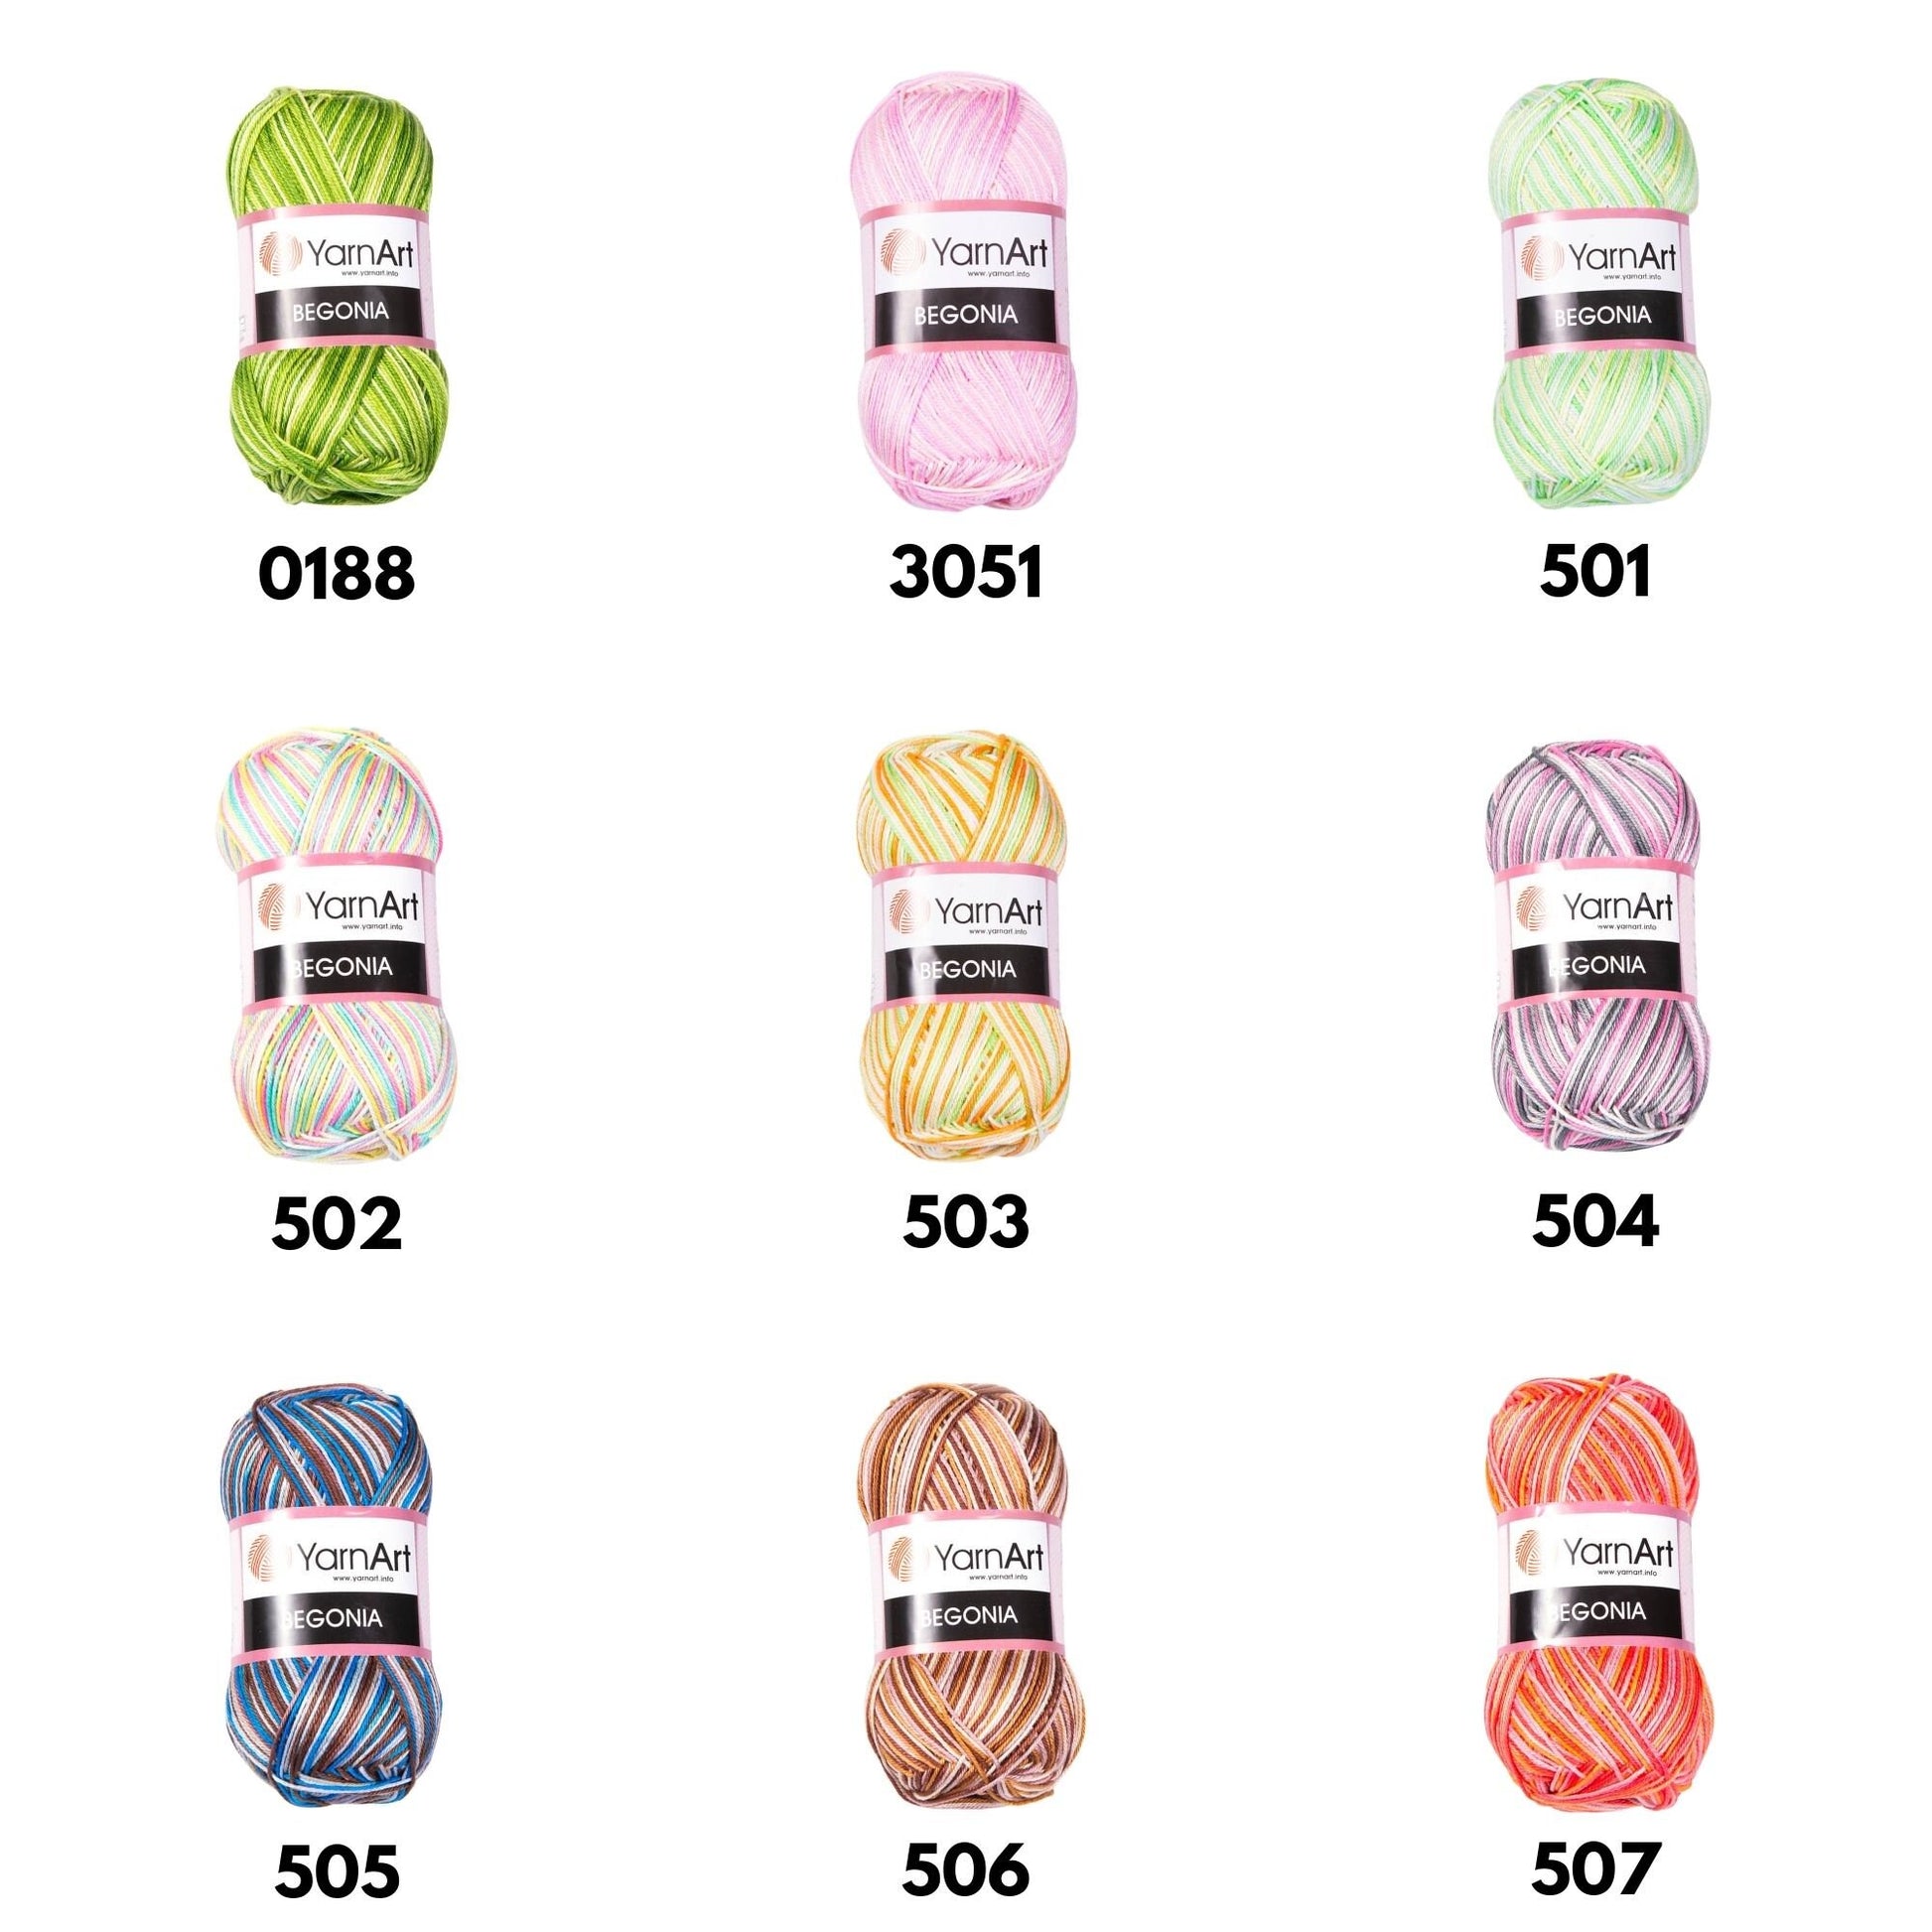 100% Mercerized Cotton Yarn Crochet yarn Amigurumi yarn YarnArt